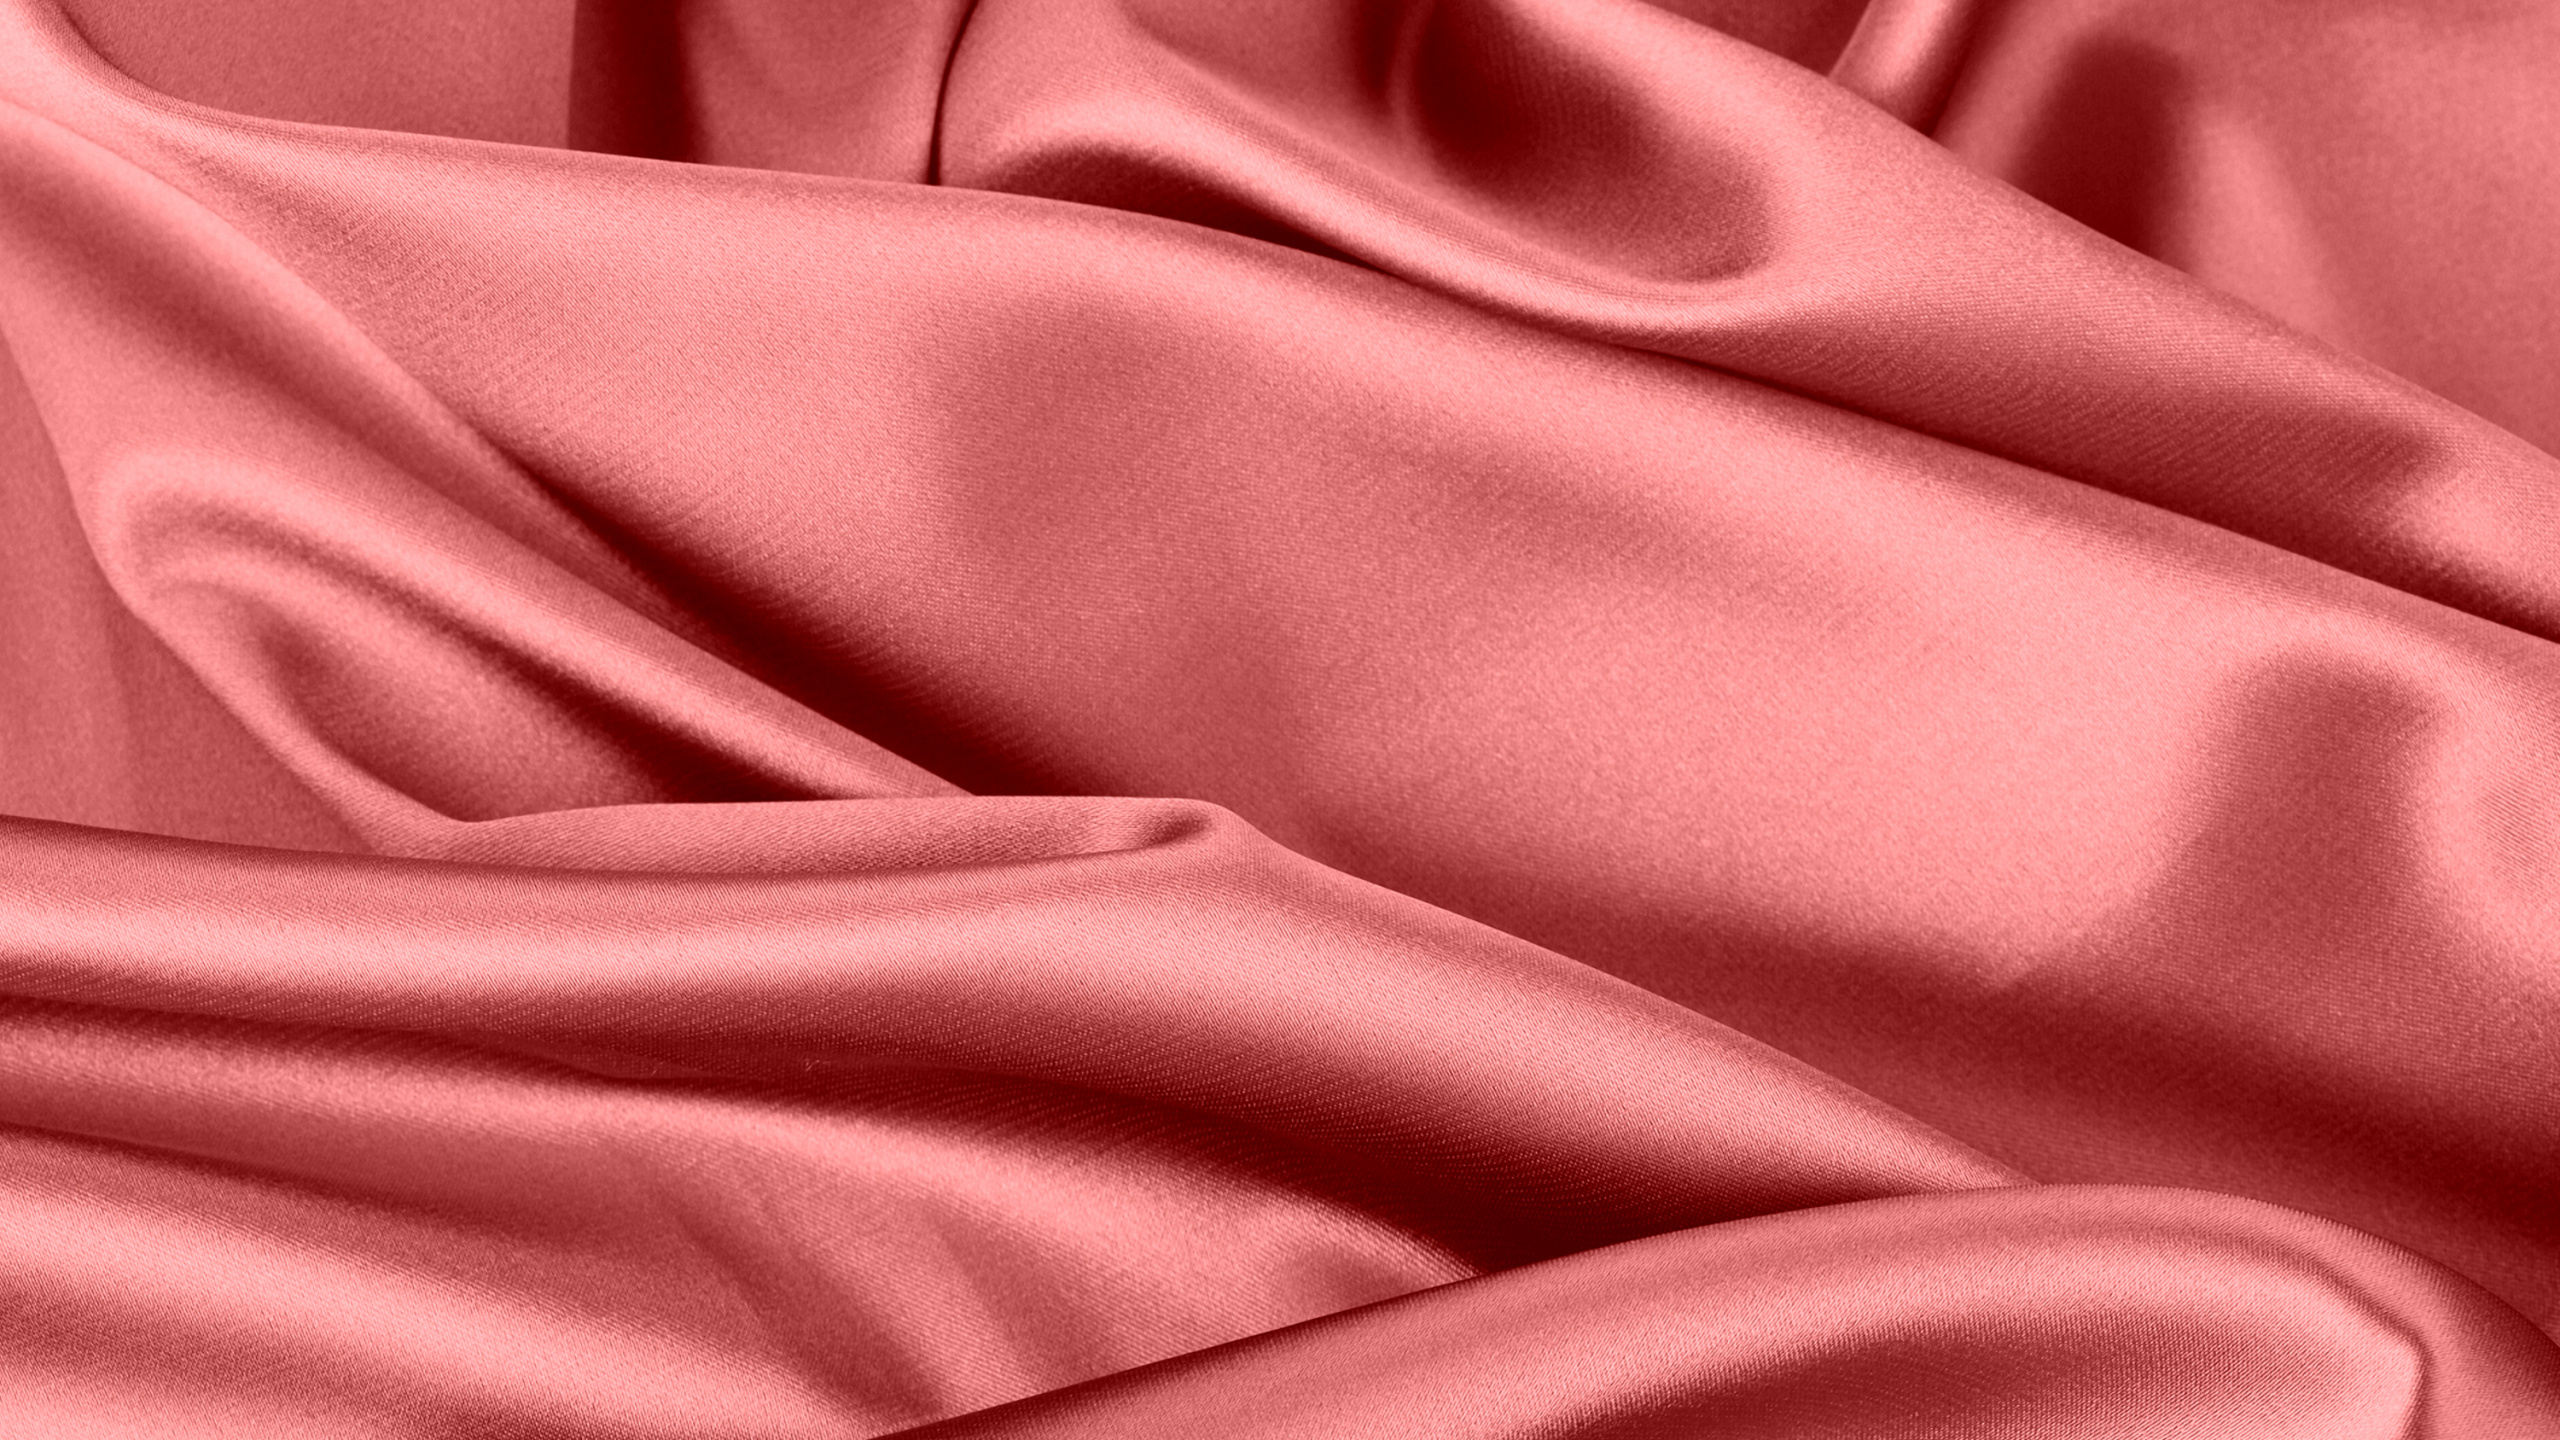 Rotes Textil in Nahaufnahmen. Wallpaper in 2560x1440 Resolution